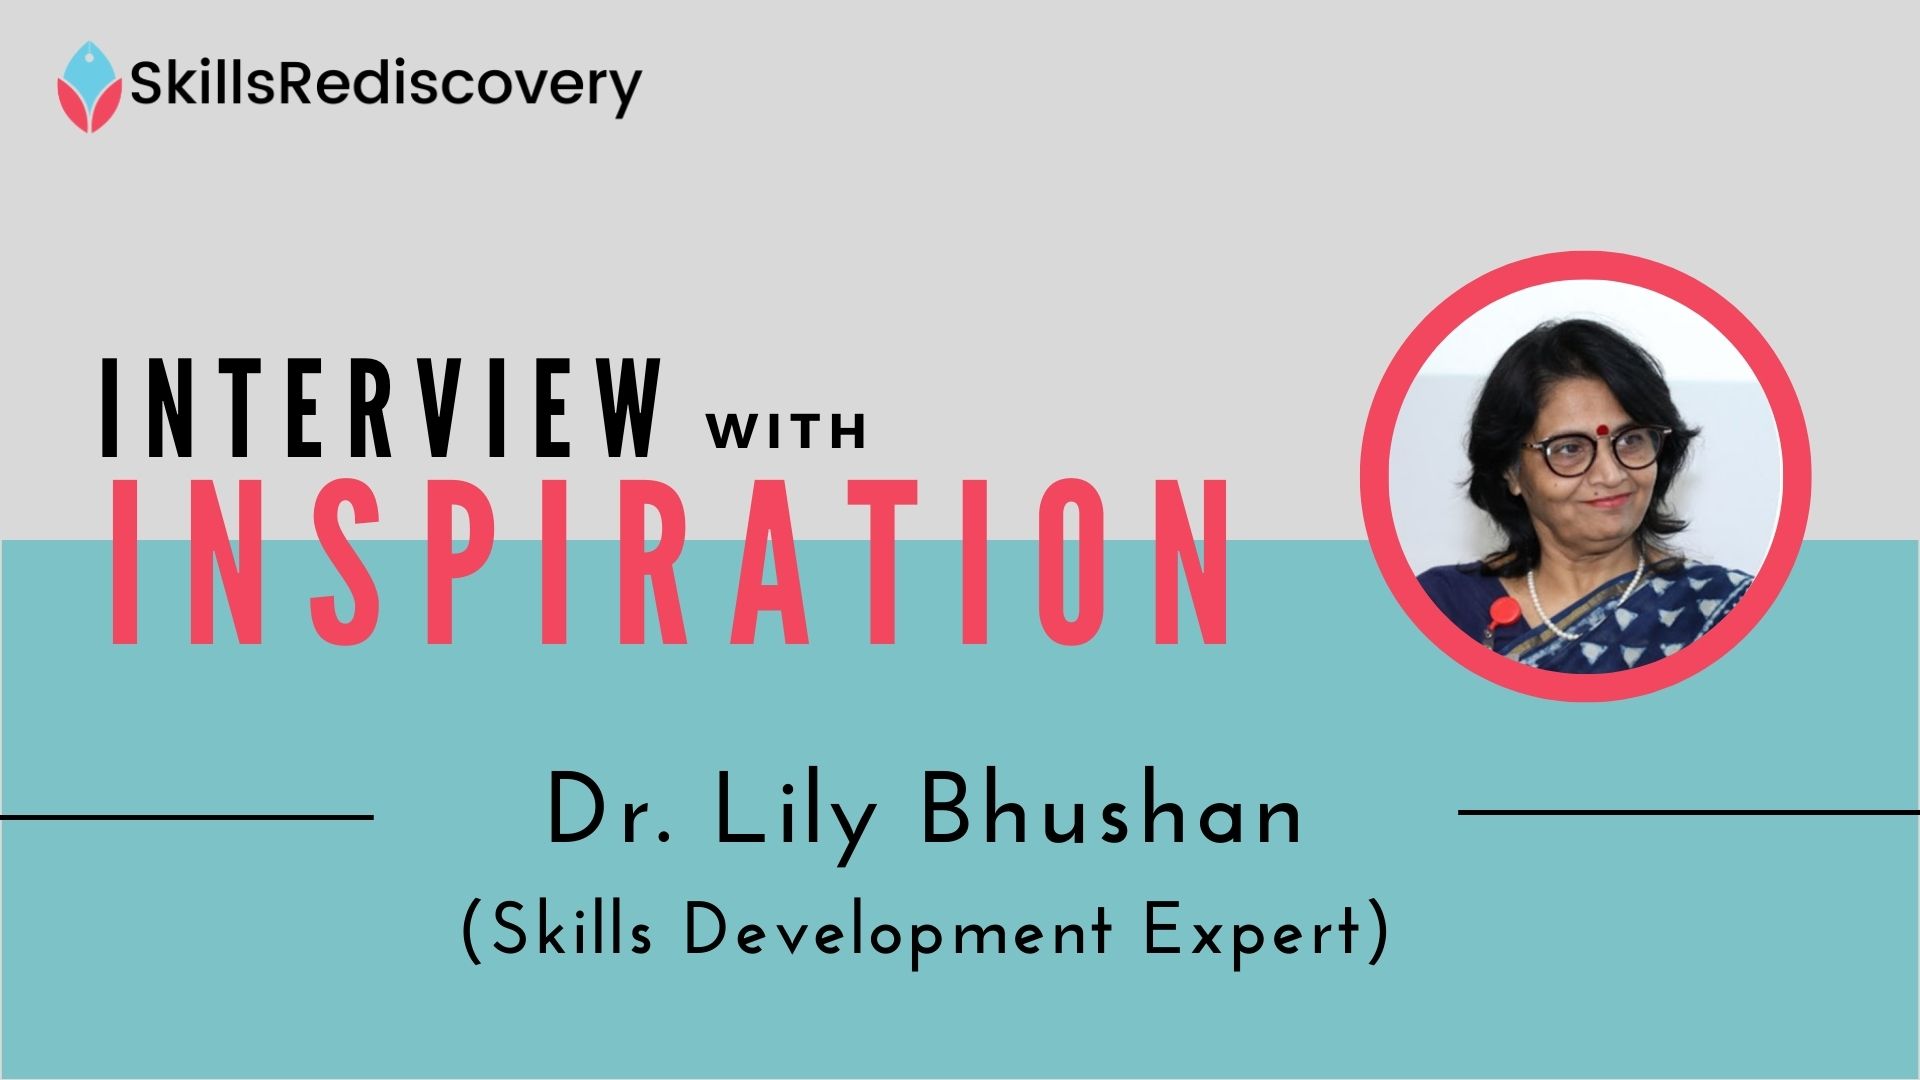 Dr. Lily Bhushan – Skills Development Expert | SkillsRediscovery